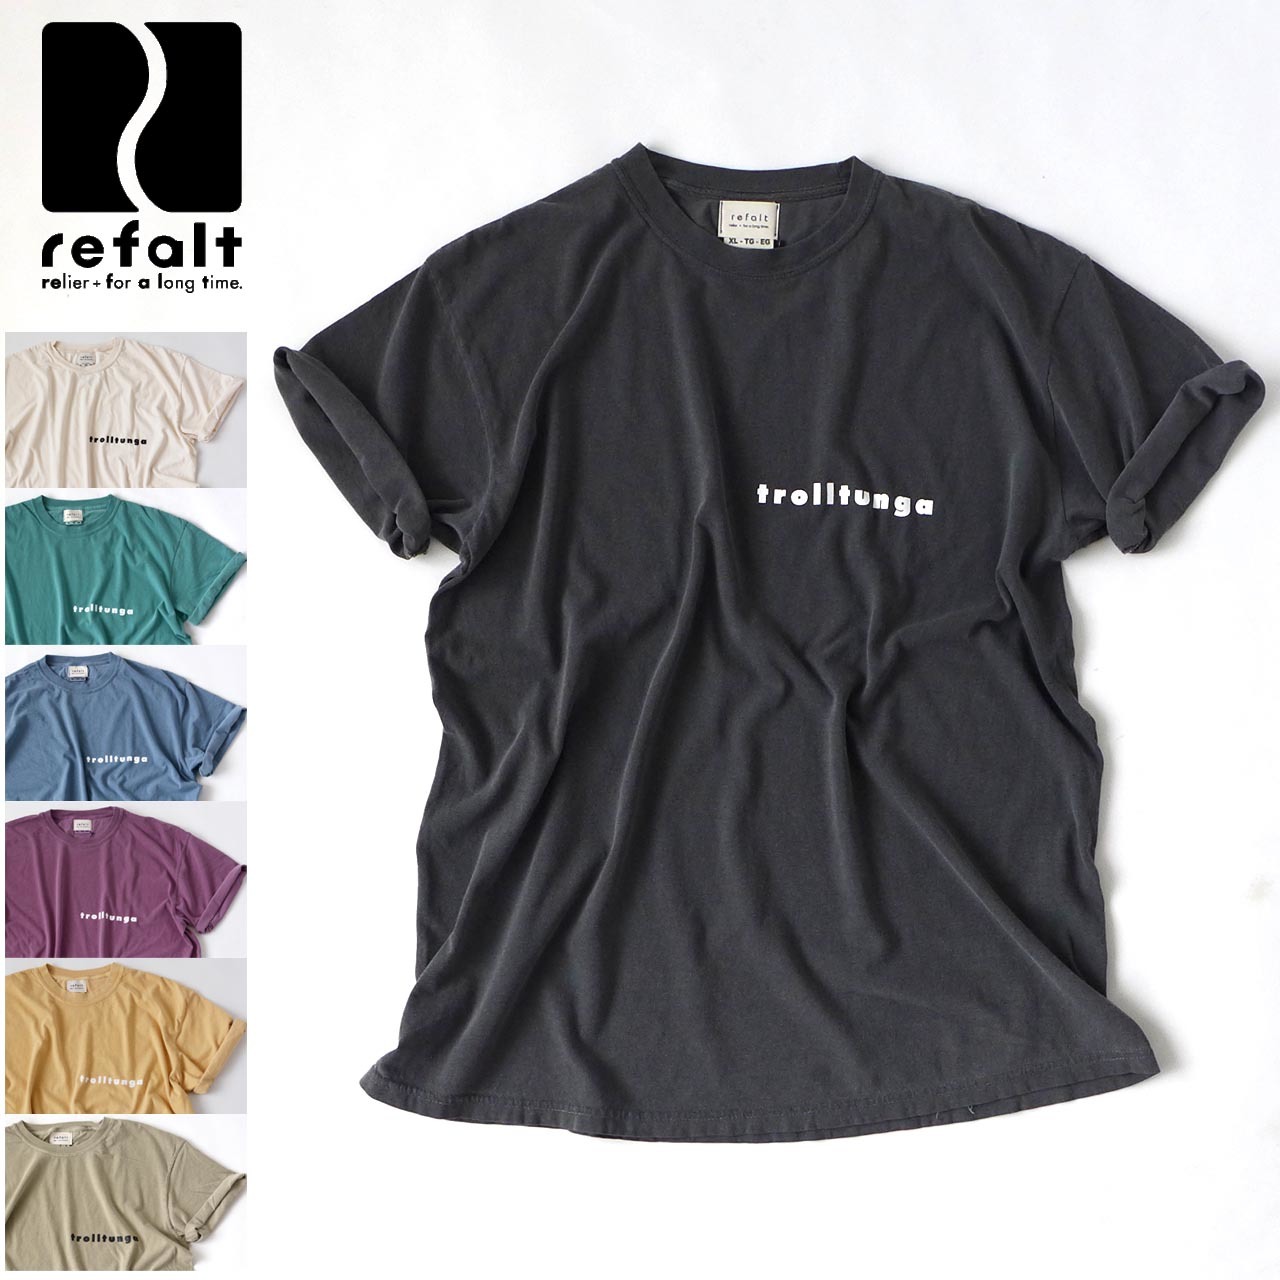 refalt original wear [リファルト オリジナルウエア] ヴィンテージ風ビッグTシャツ「trolltunga tee」 [tee-Tro1101] _f0051306_10115205.jpg